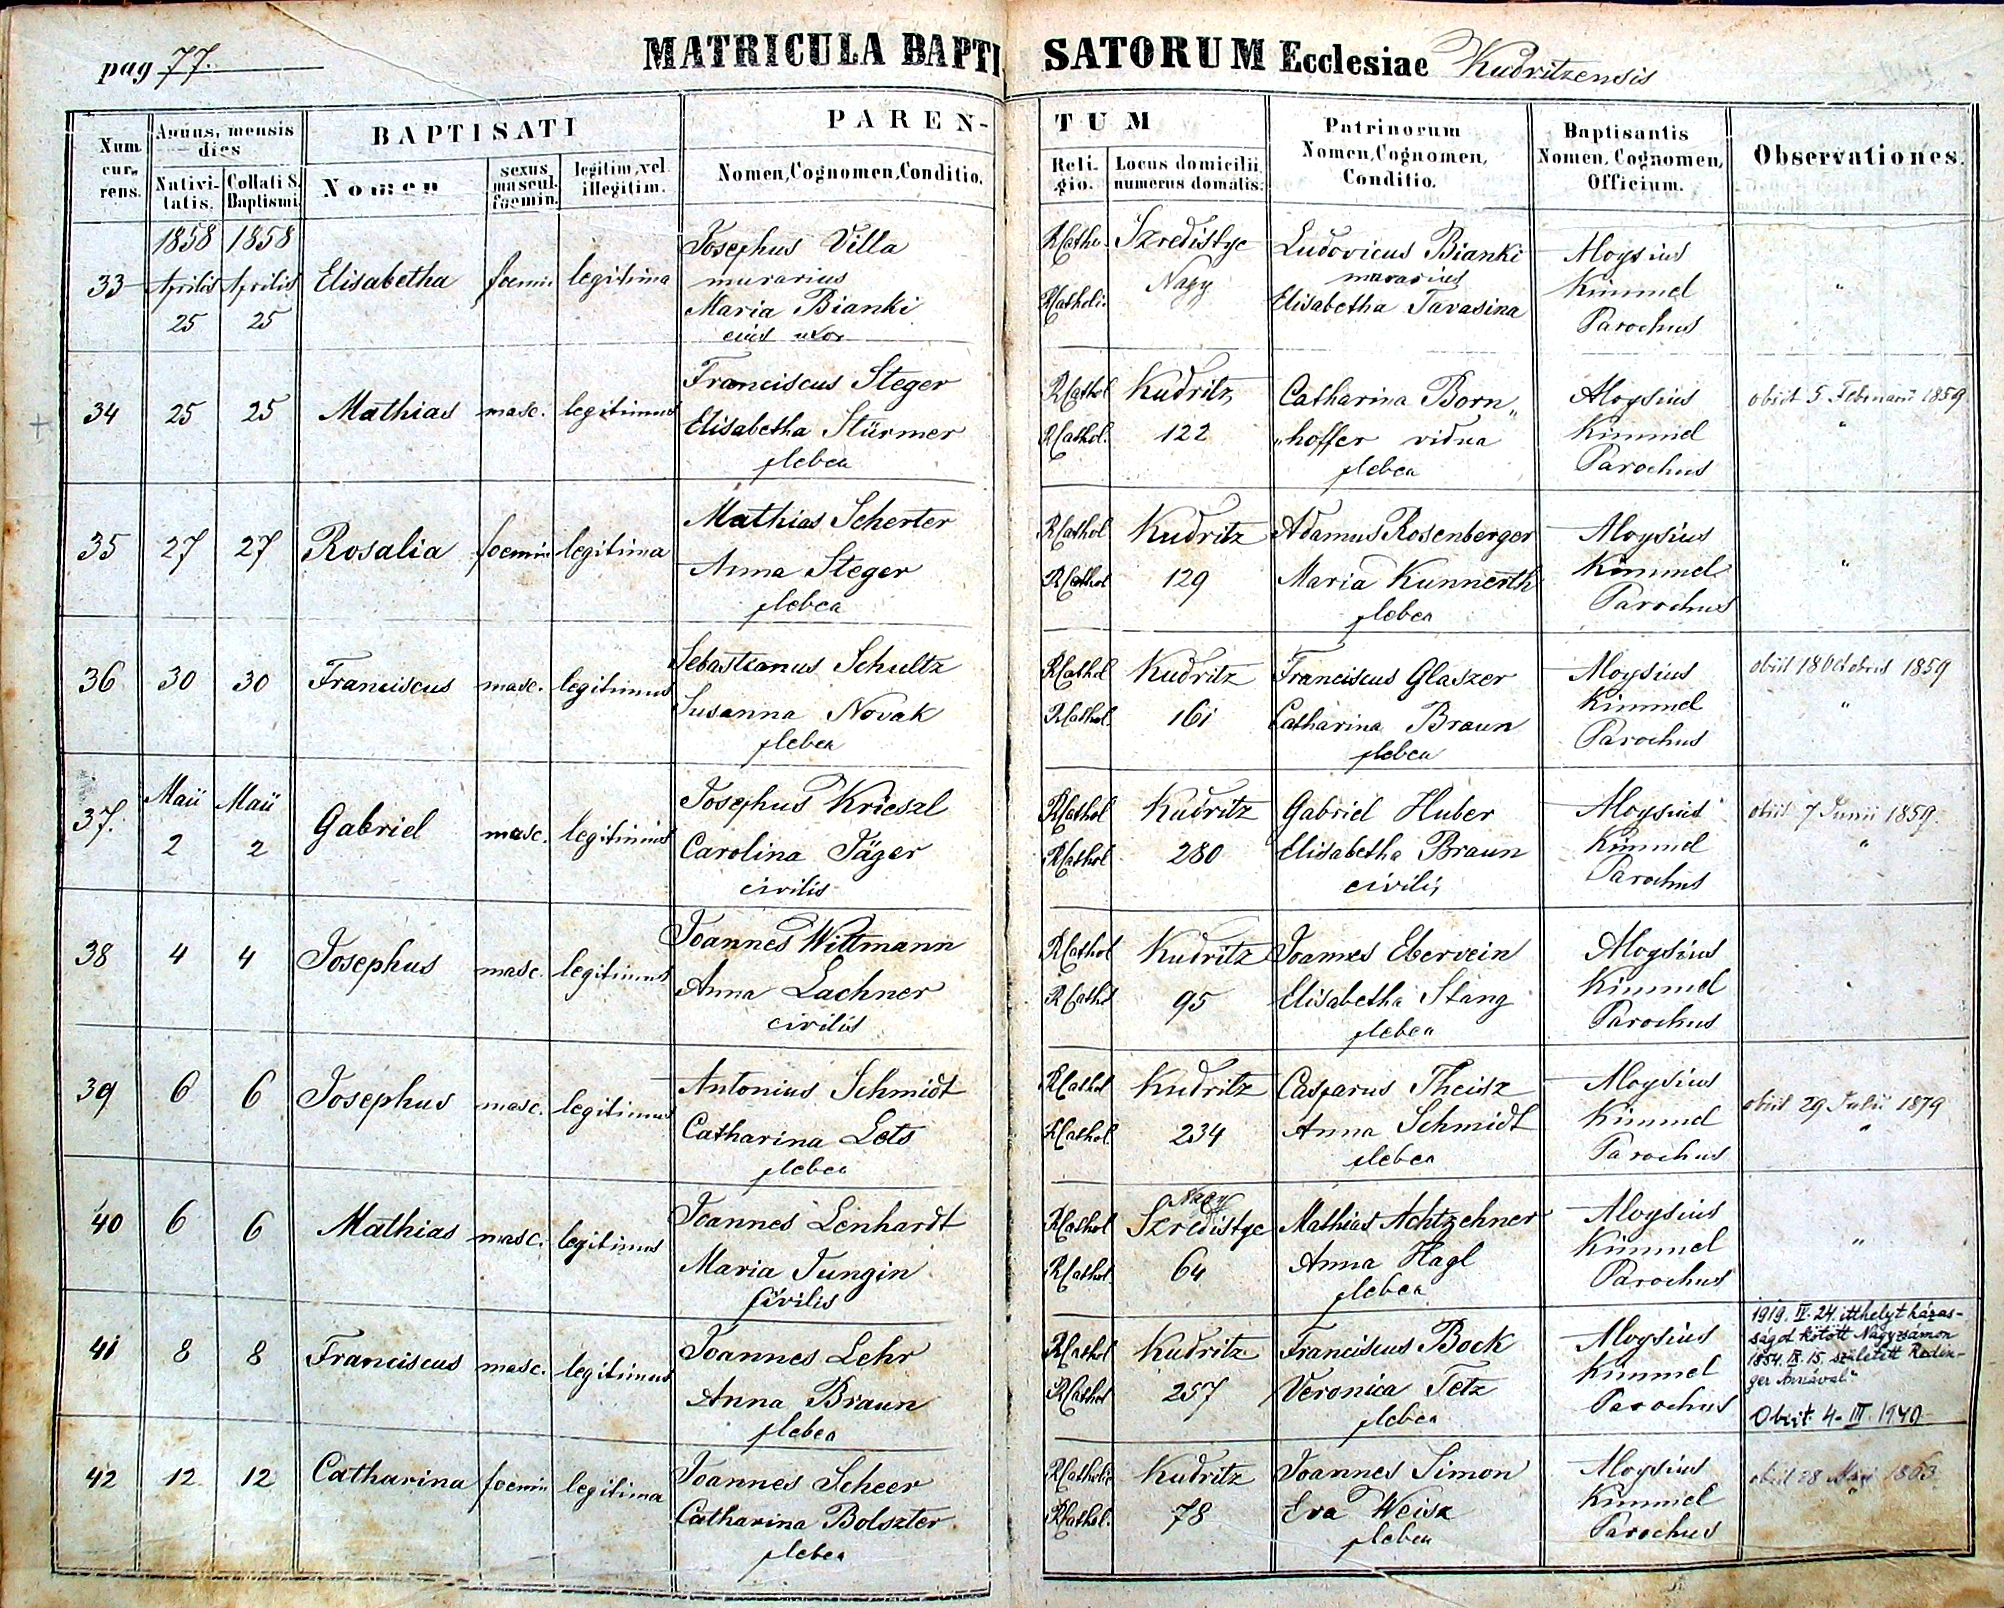 images/church_records/BIRTHS/1852-1870B/077